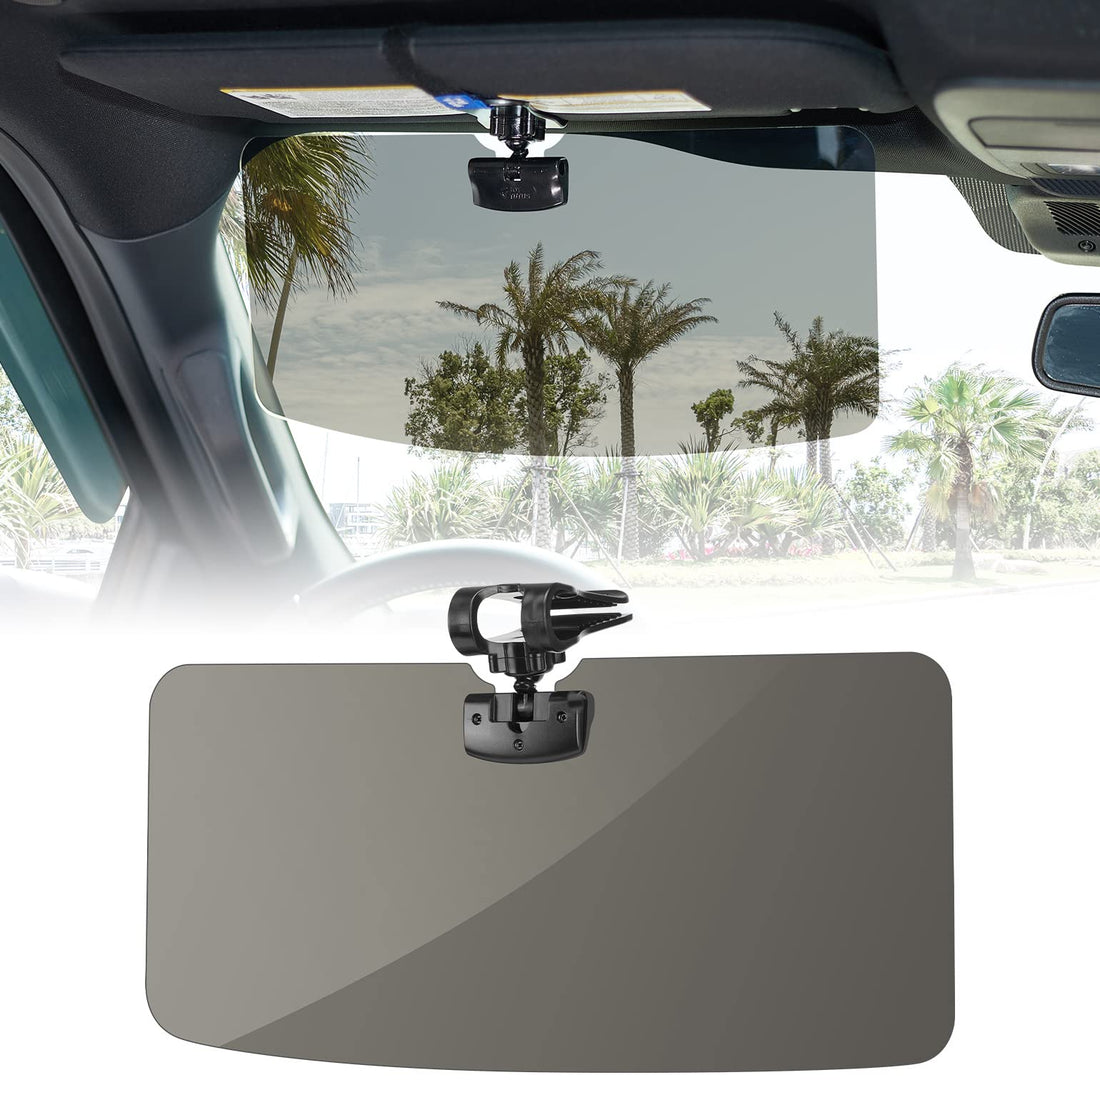 Sun Visor for Car, Universal Anti-Glare Polarized Sun Visor Extender , UV400 Car Visor Extension Protect